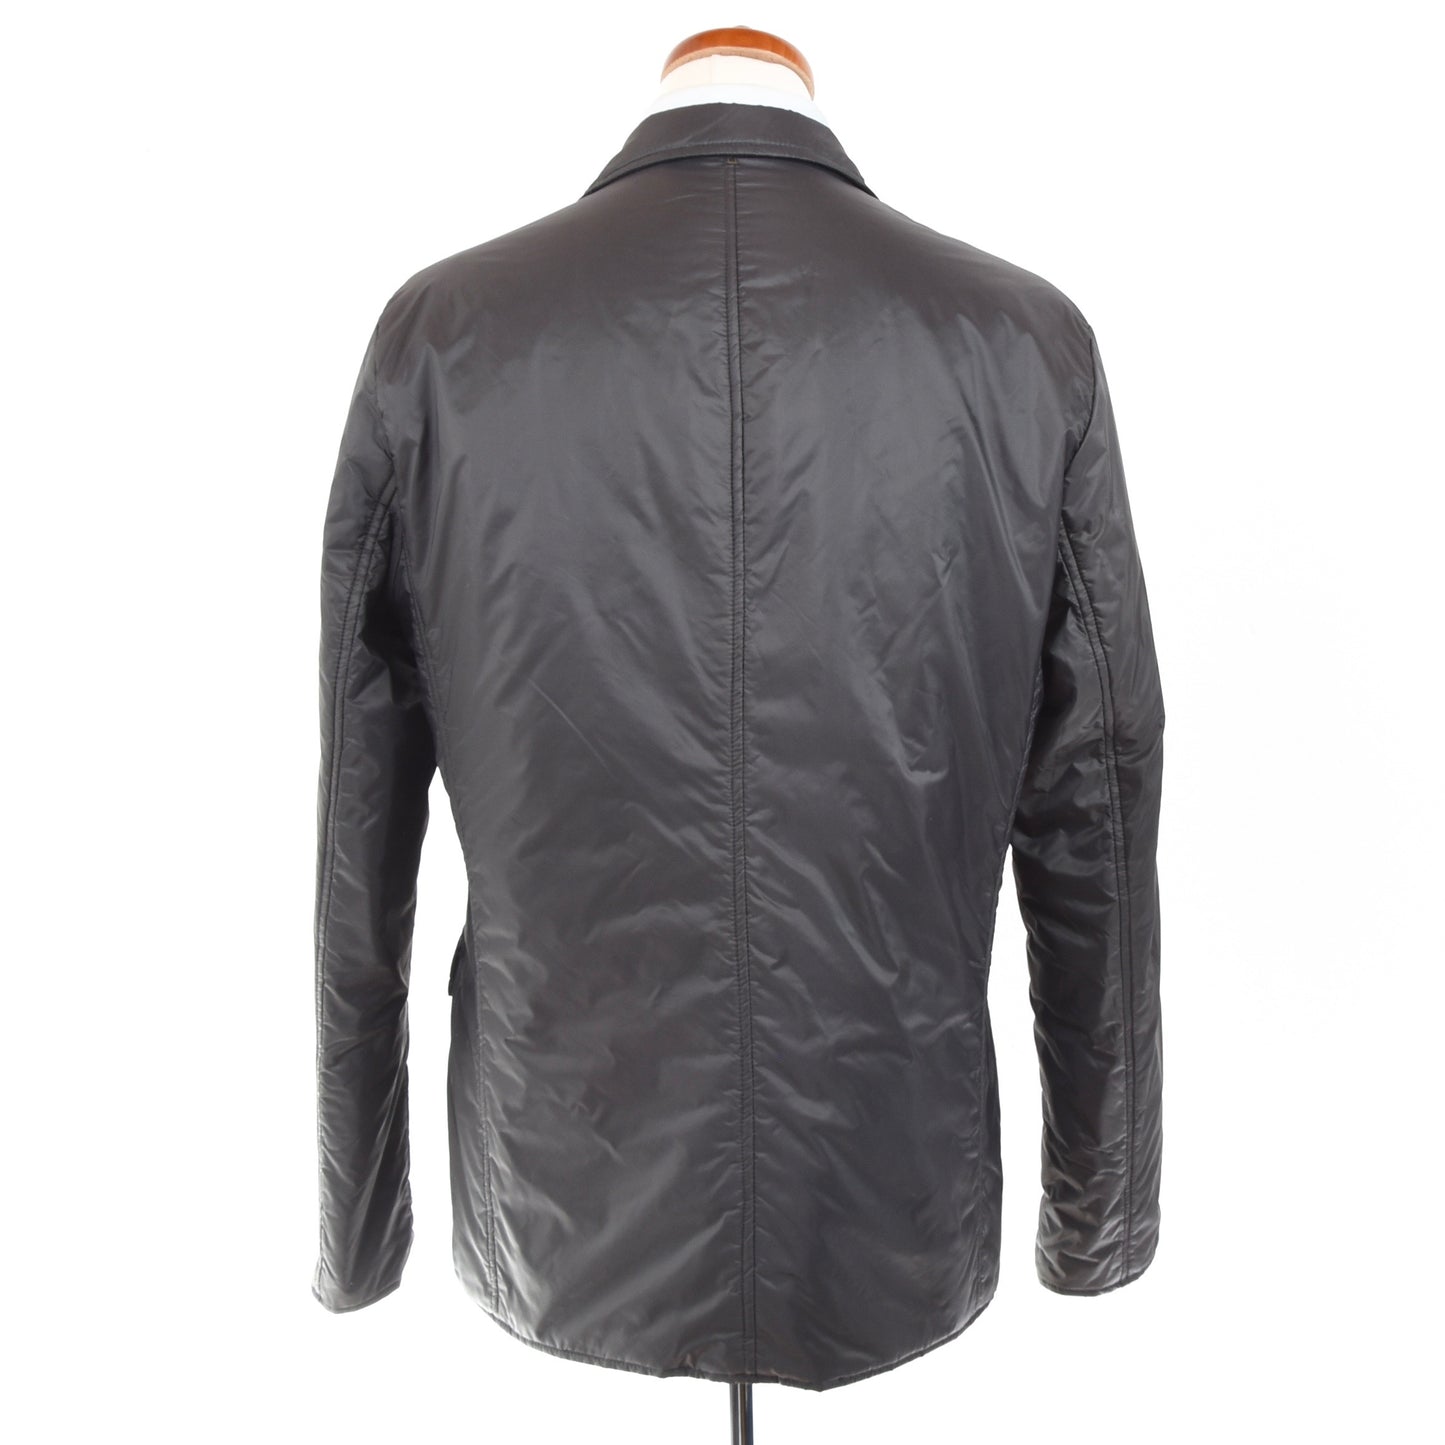 Michael Kors Reversible Jacket Size 42R - Black/Grey